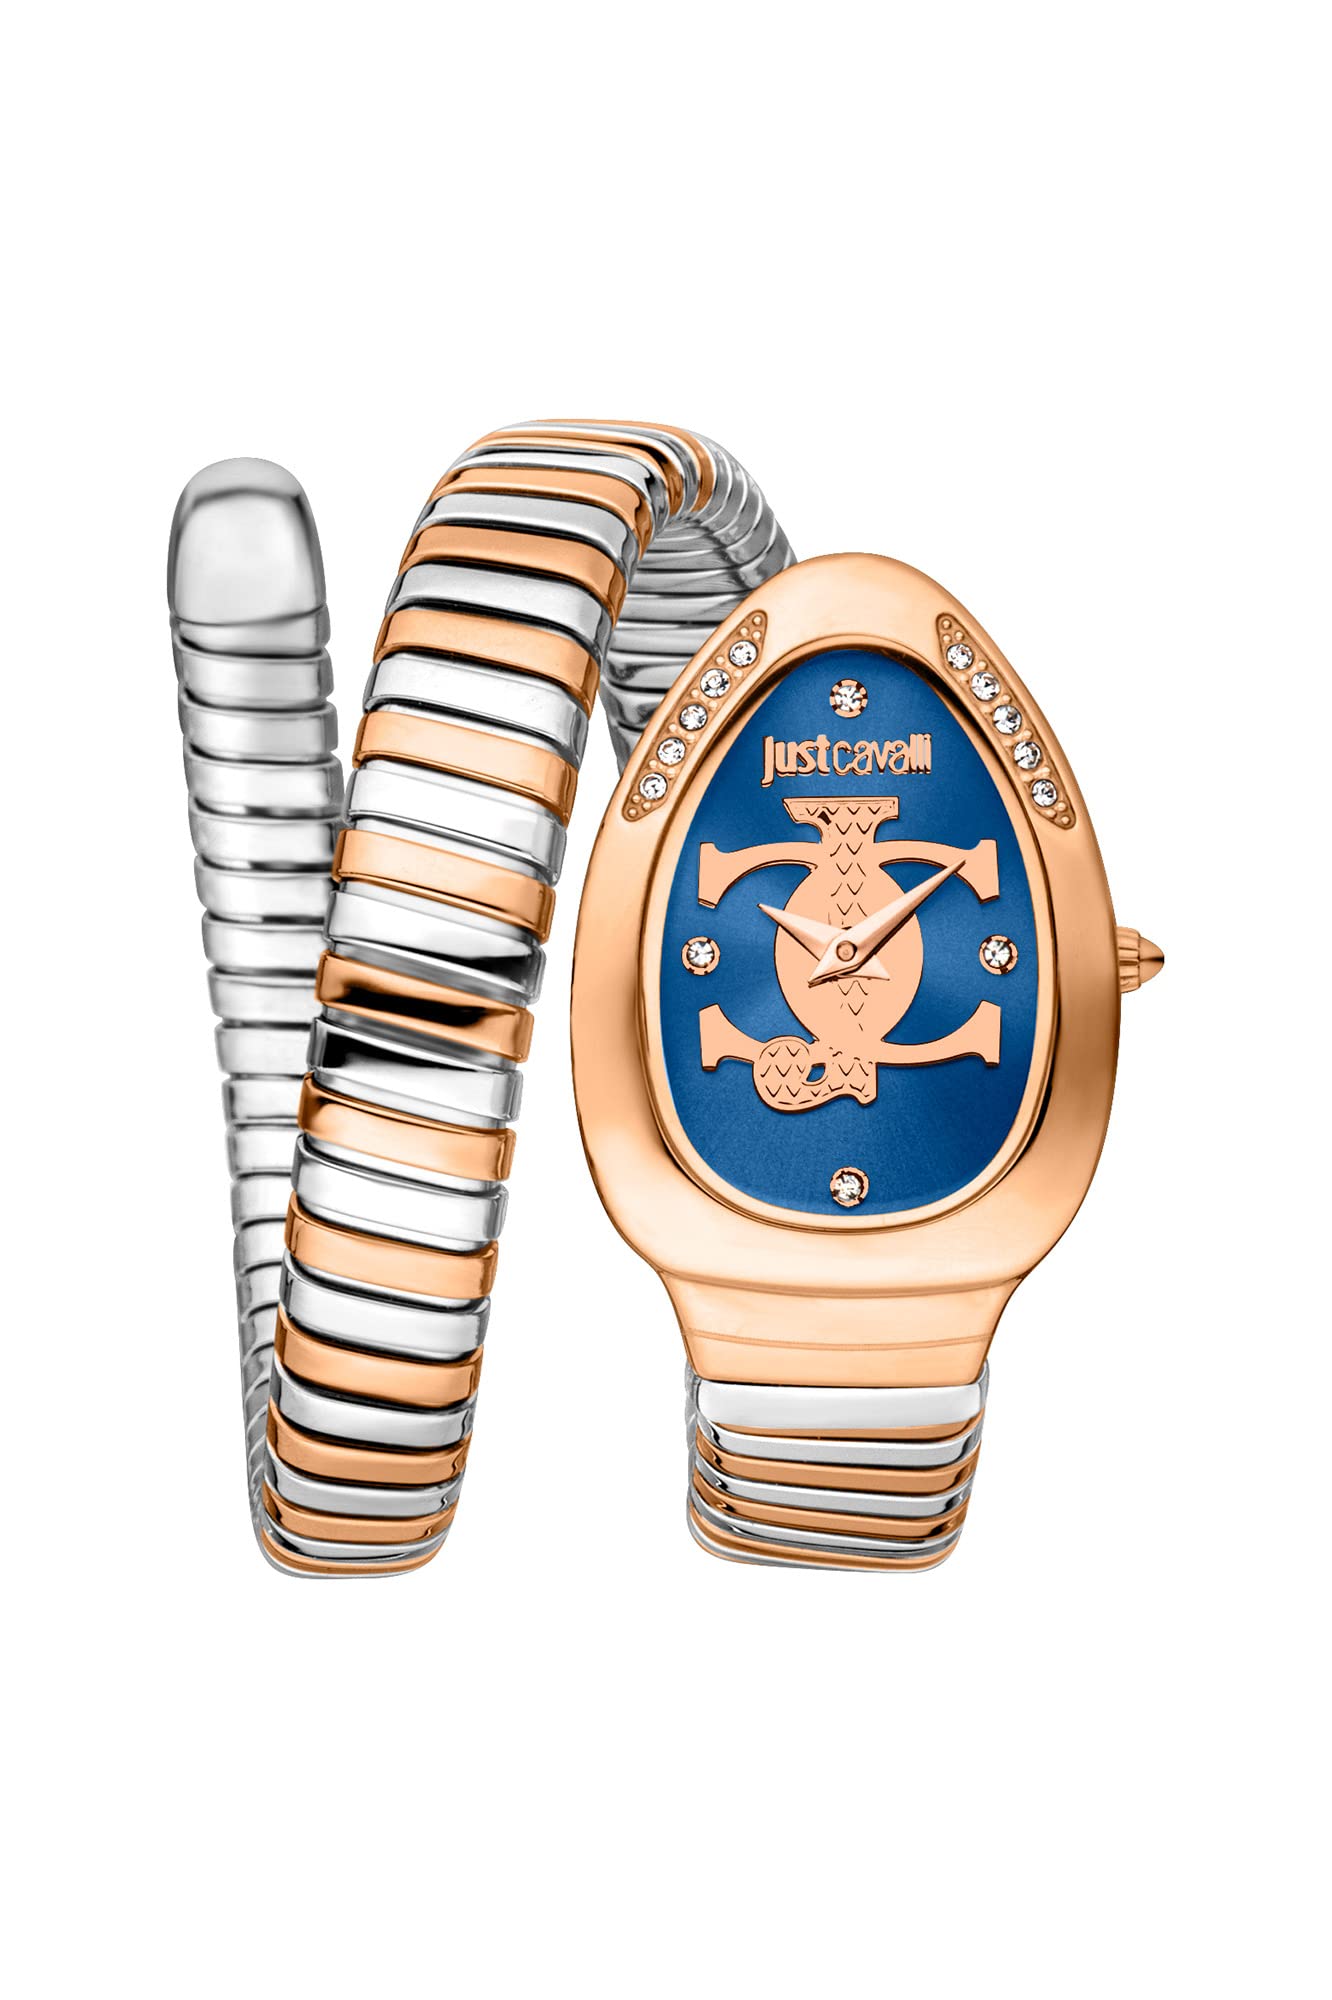 Just Cavalli Damen Analog Quarz Uhr mit Edelstahl Armband JC1L227M0085